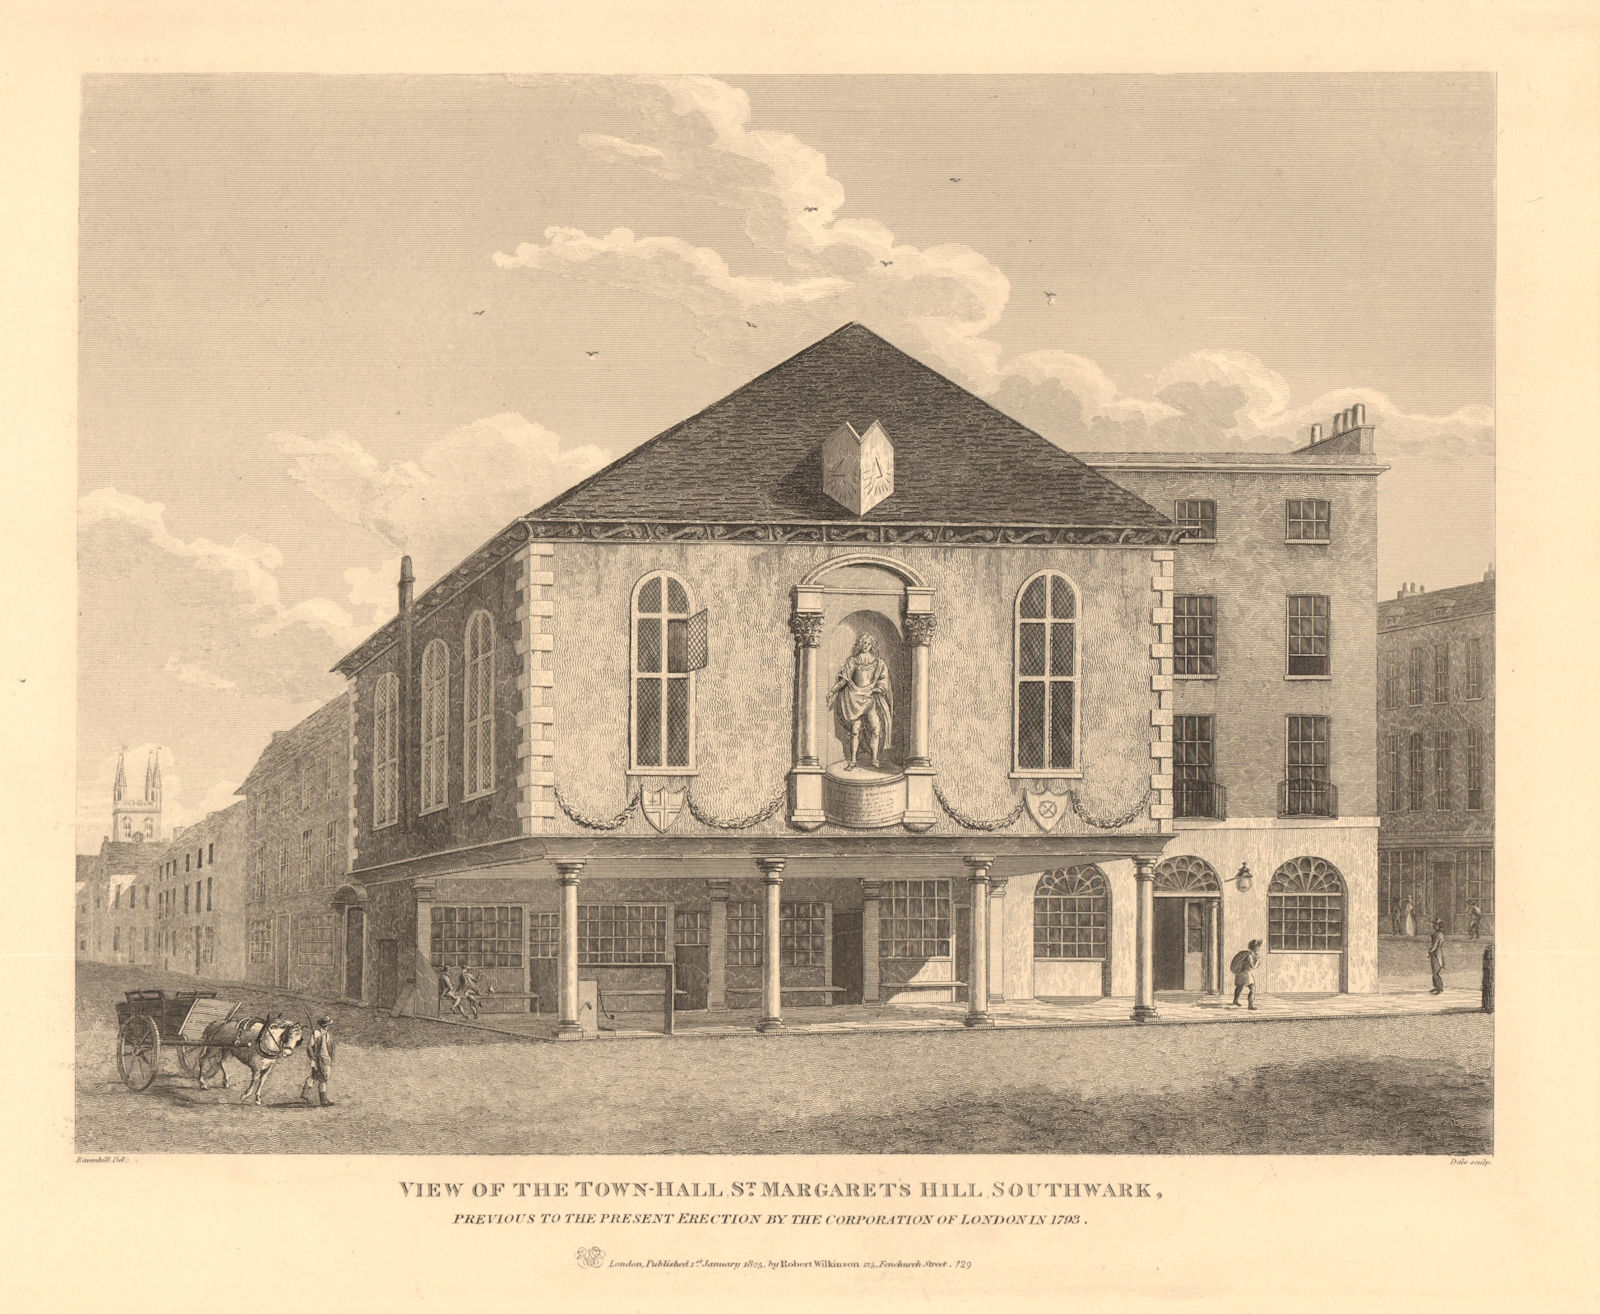 SOUTHWARK TOWN HALL, St. Margarets Hill (Now Borough High Street), London 1834